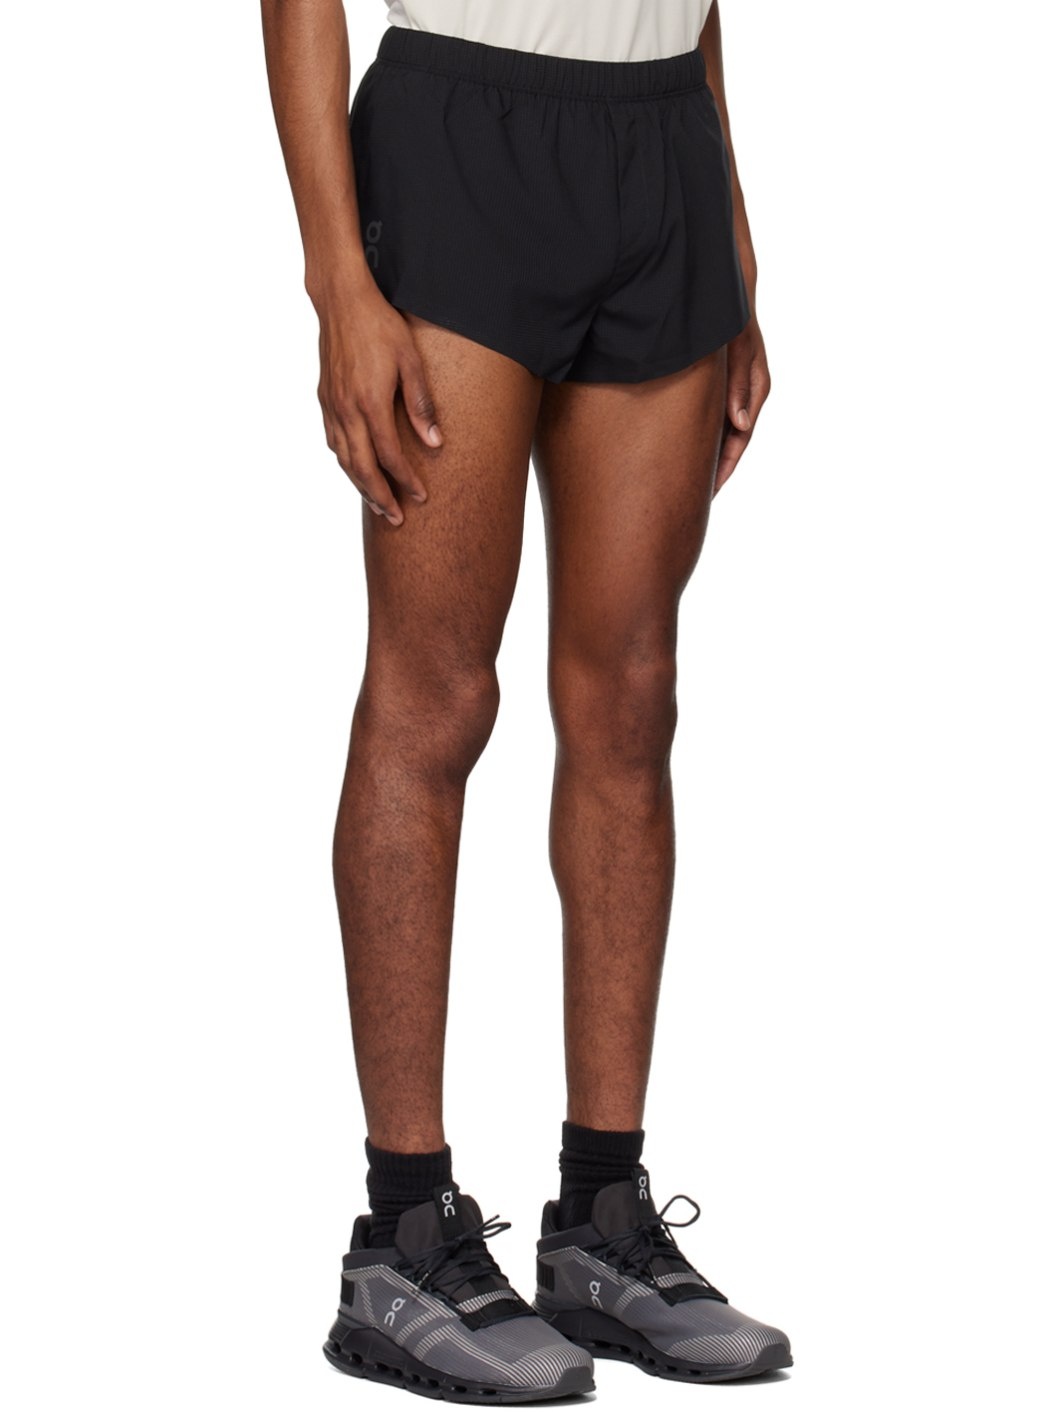 Black Race Shorts - 2